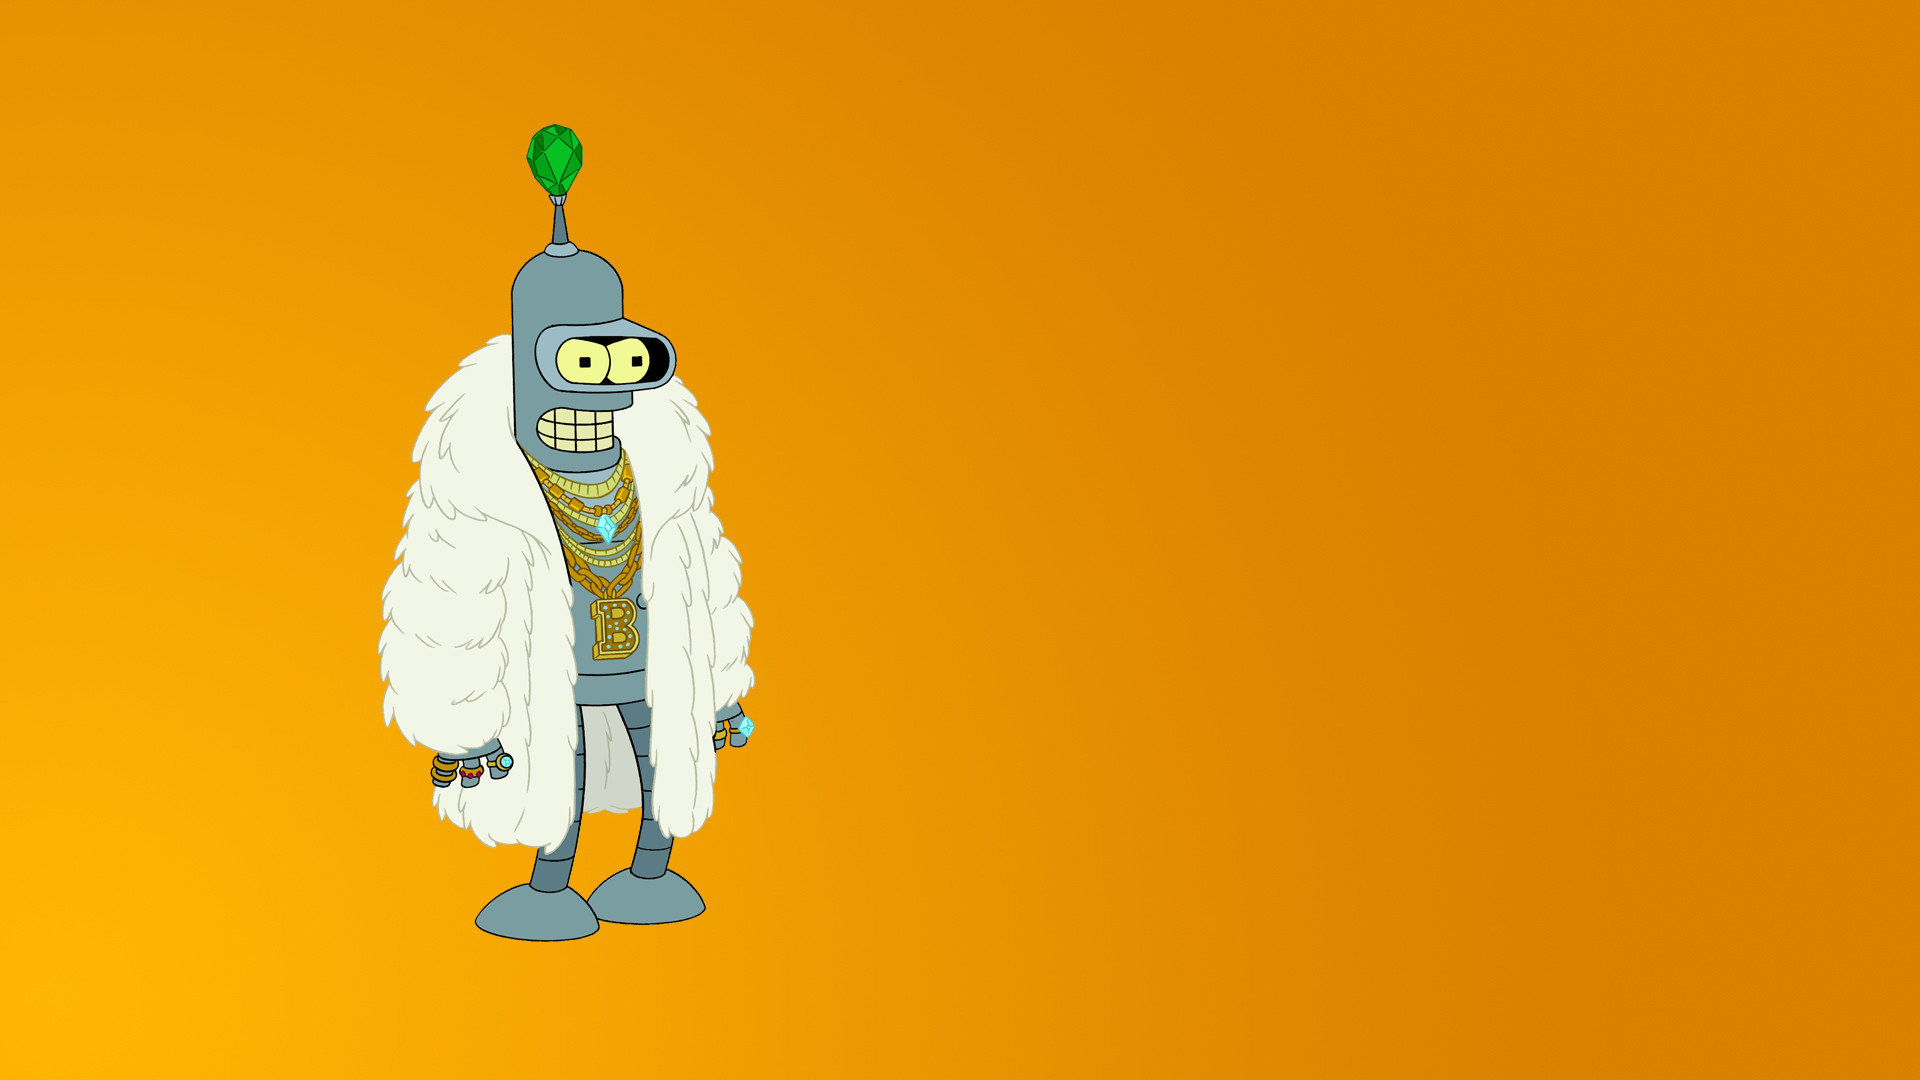 Best Bender (Futurama) wallpaper ID:253834 for High Resolution full hd 1080p computer